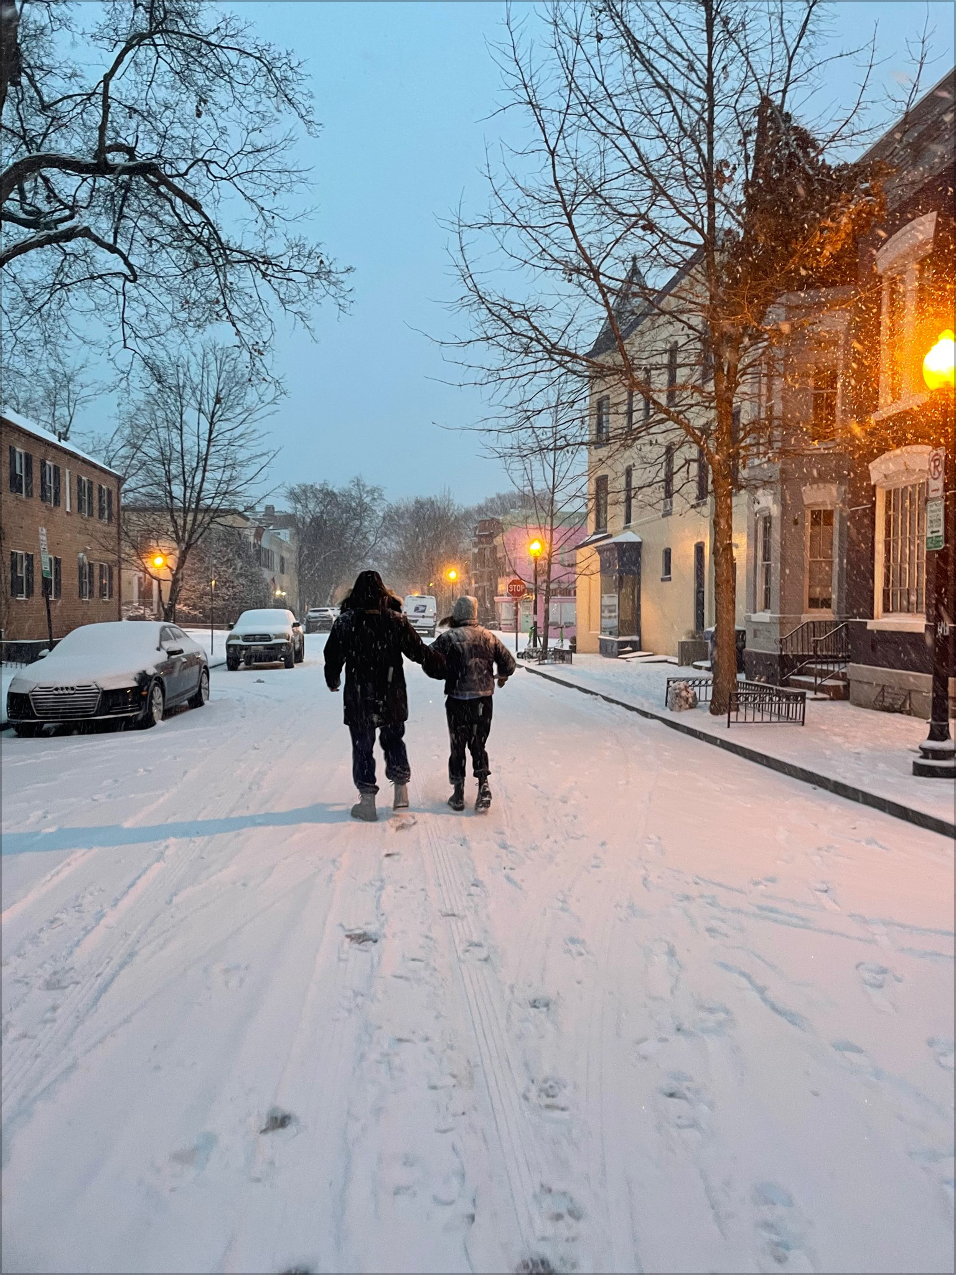 Two people walking on the snowy street